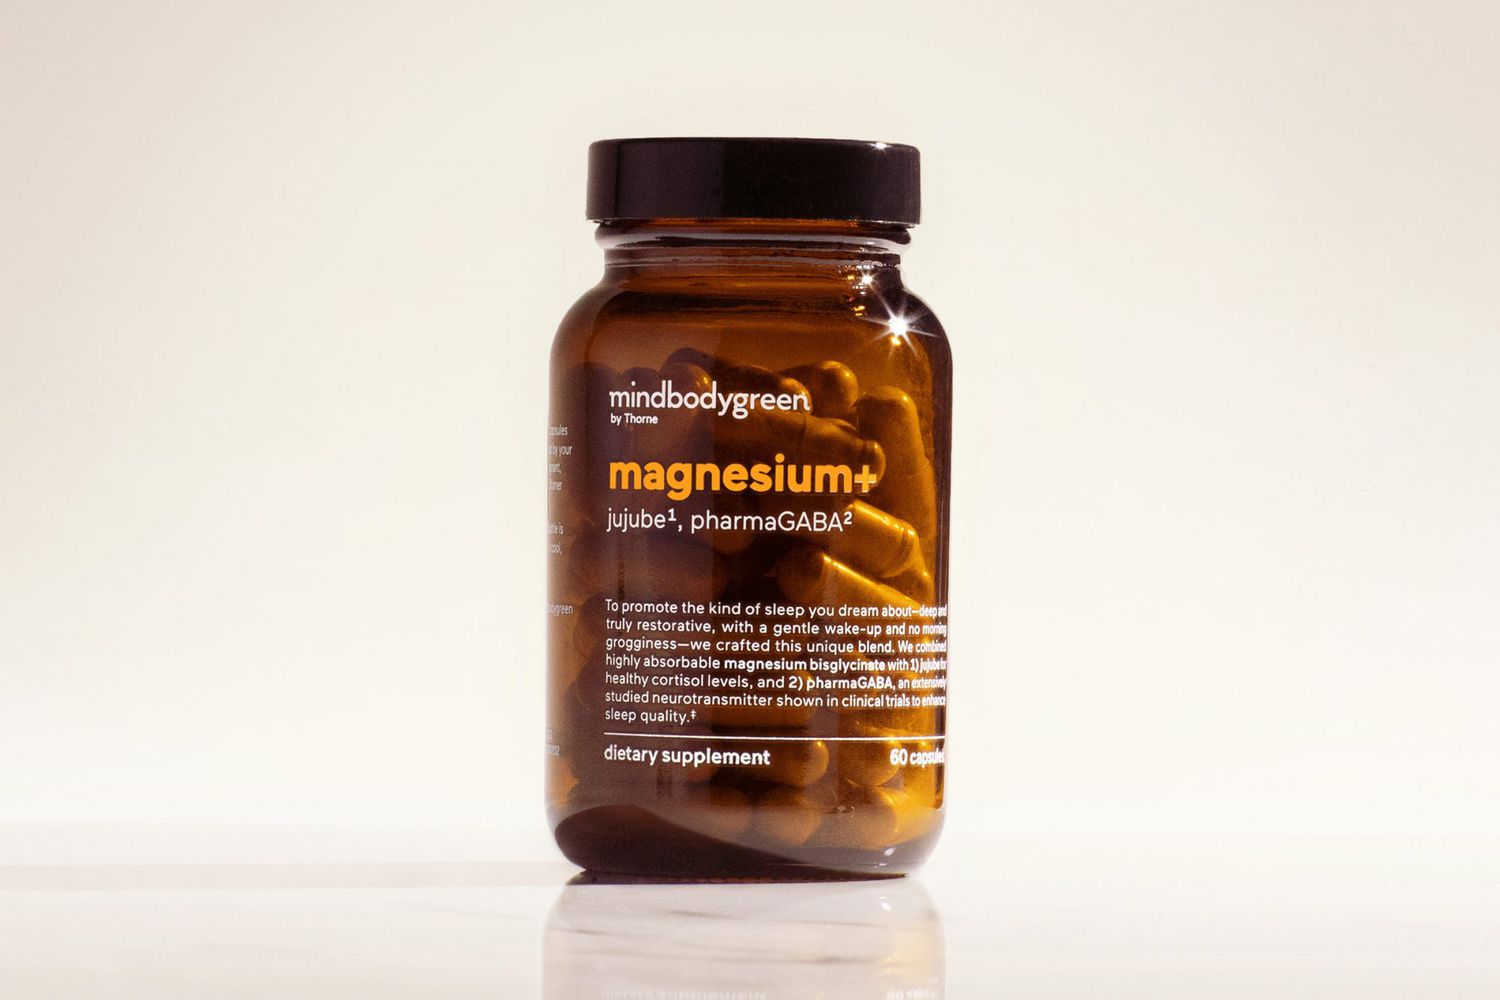 Magnesium+ by mindbodygreen